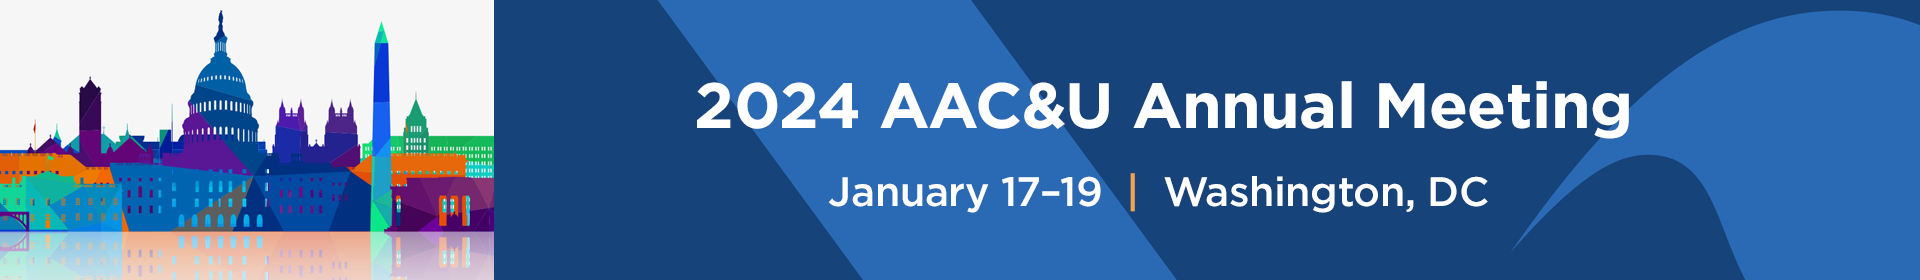 AAC&U 2024 Annual Meeting